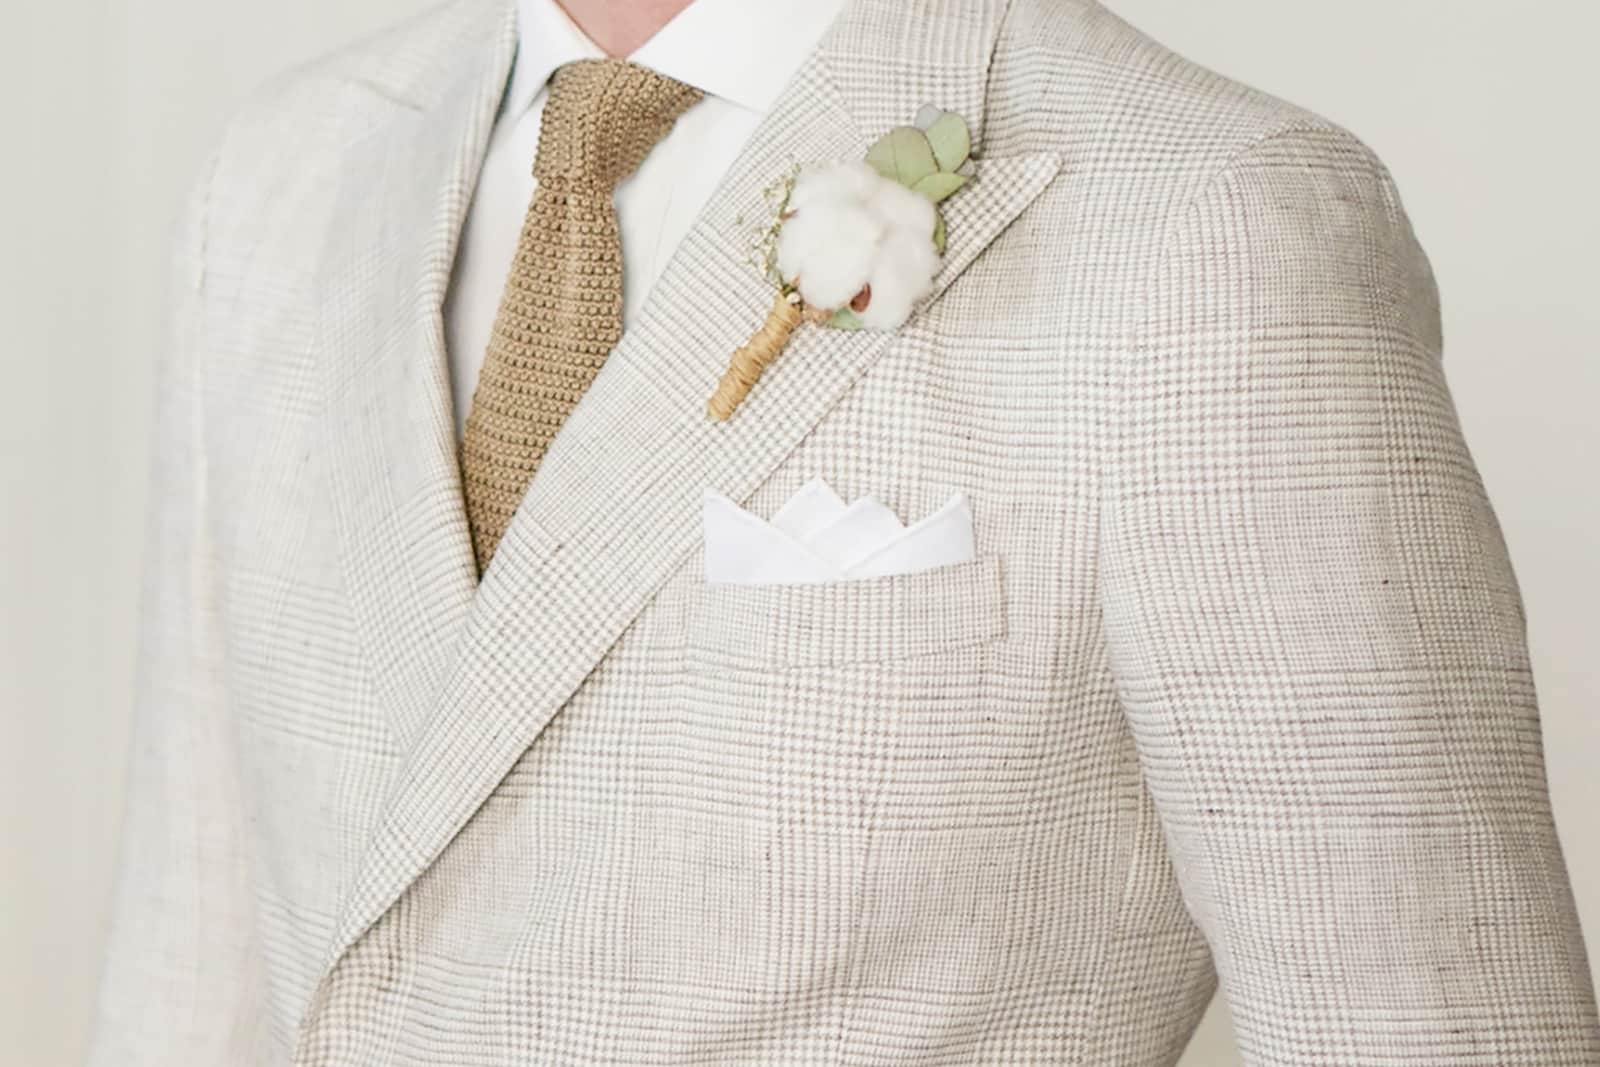 Tissu en lin motif Prince de Galles pour costume de mariage sur mesure